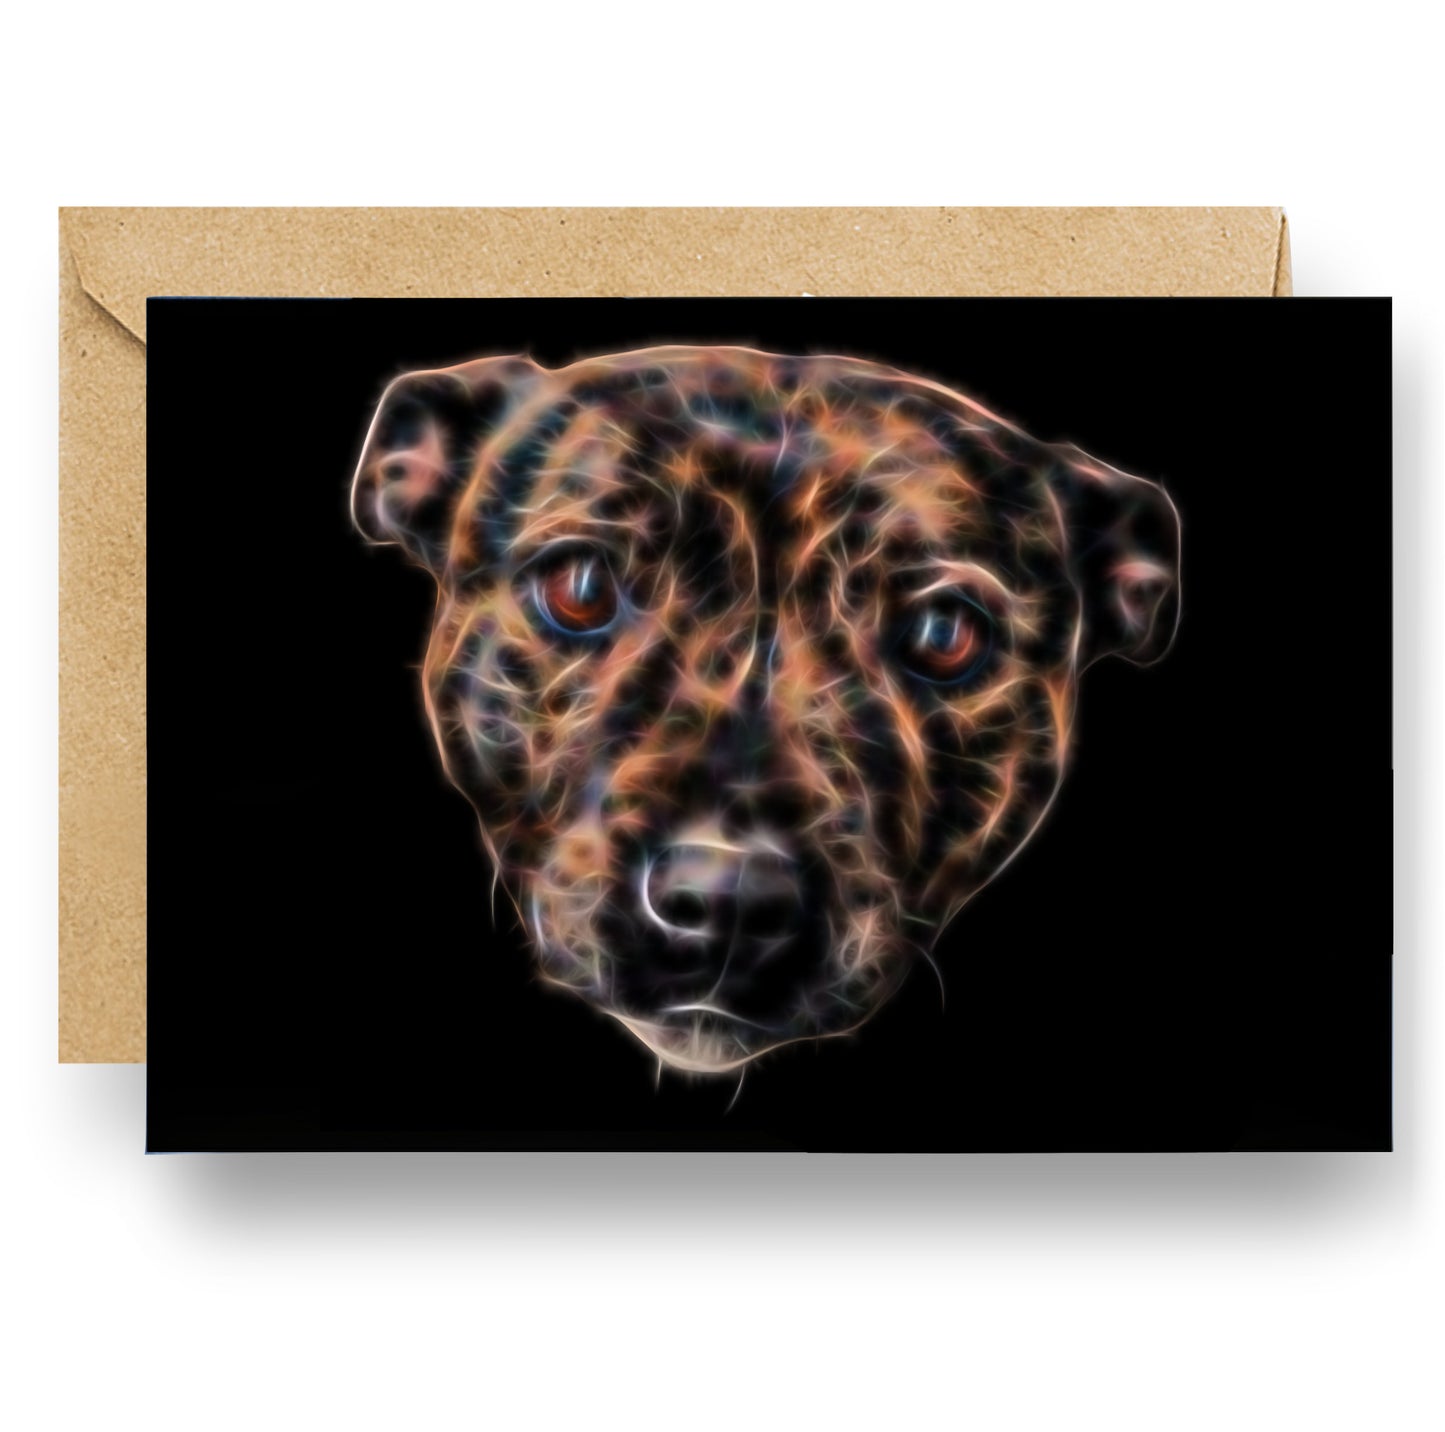 Brindle Staffordshire Bull Terrier  Greeting Card with Stunning Fractal Art Design. (Blank Inside) Brindle Staffy Card